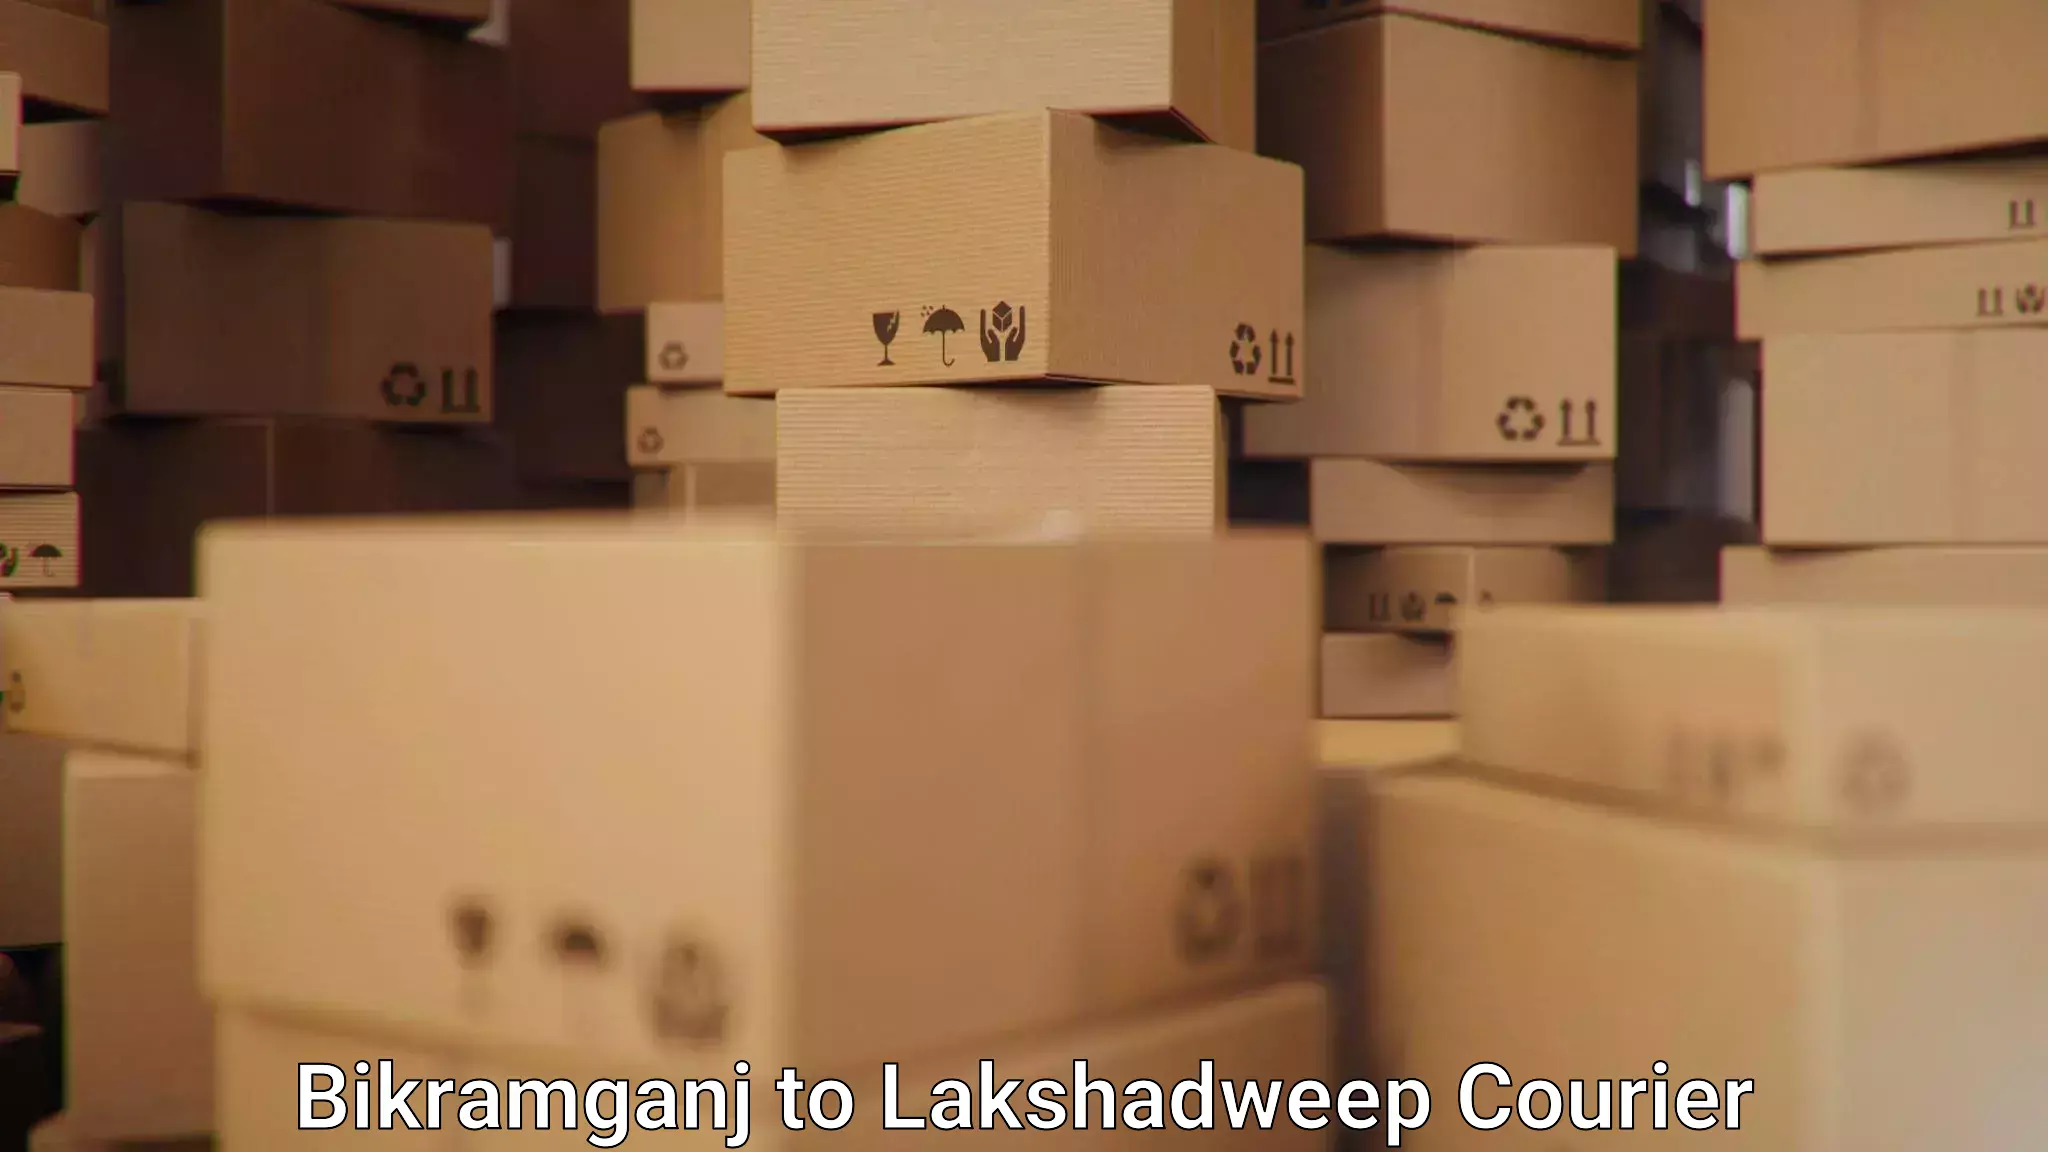 User-friendly courier app Bikramganj to Lakshadweep